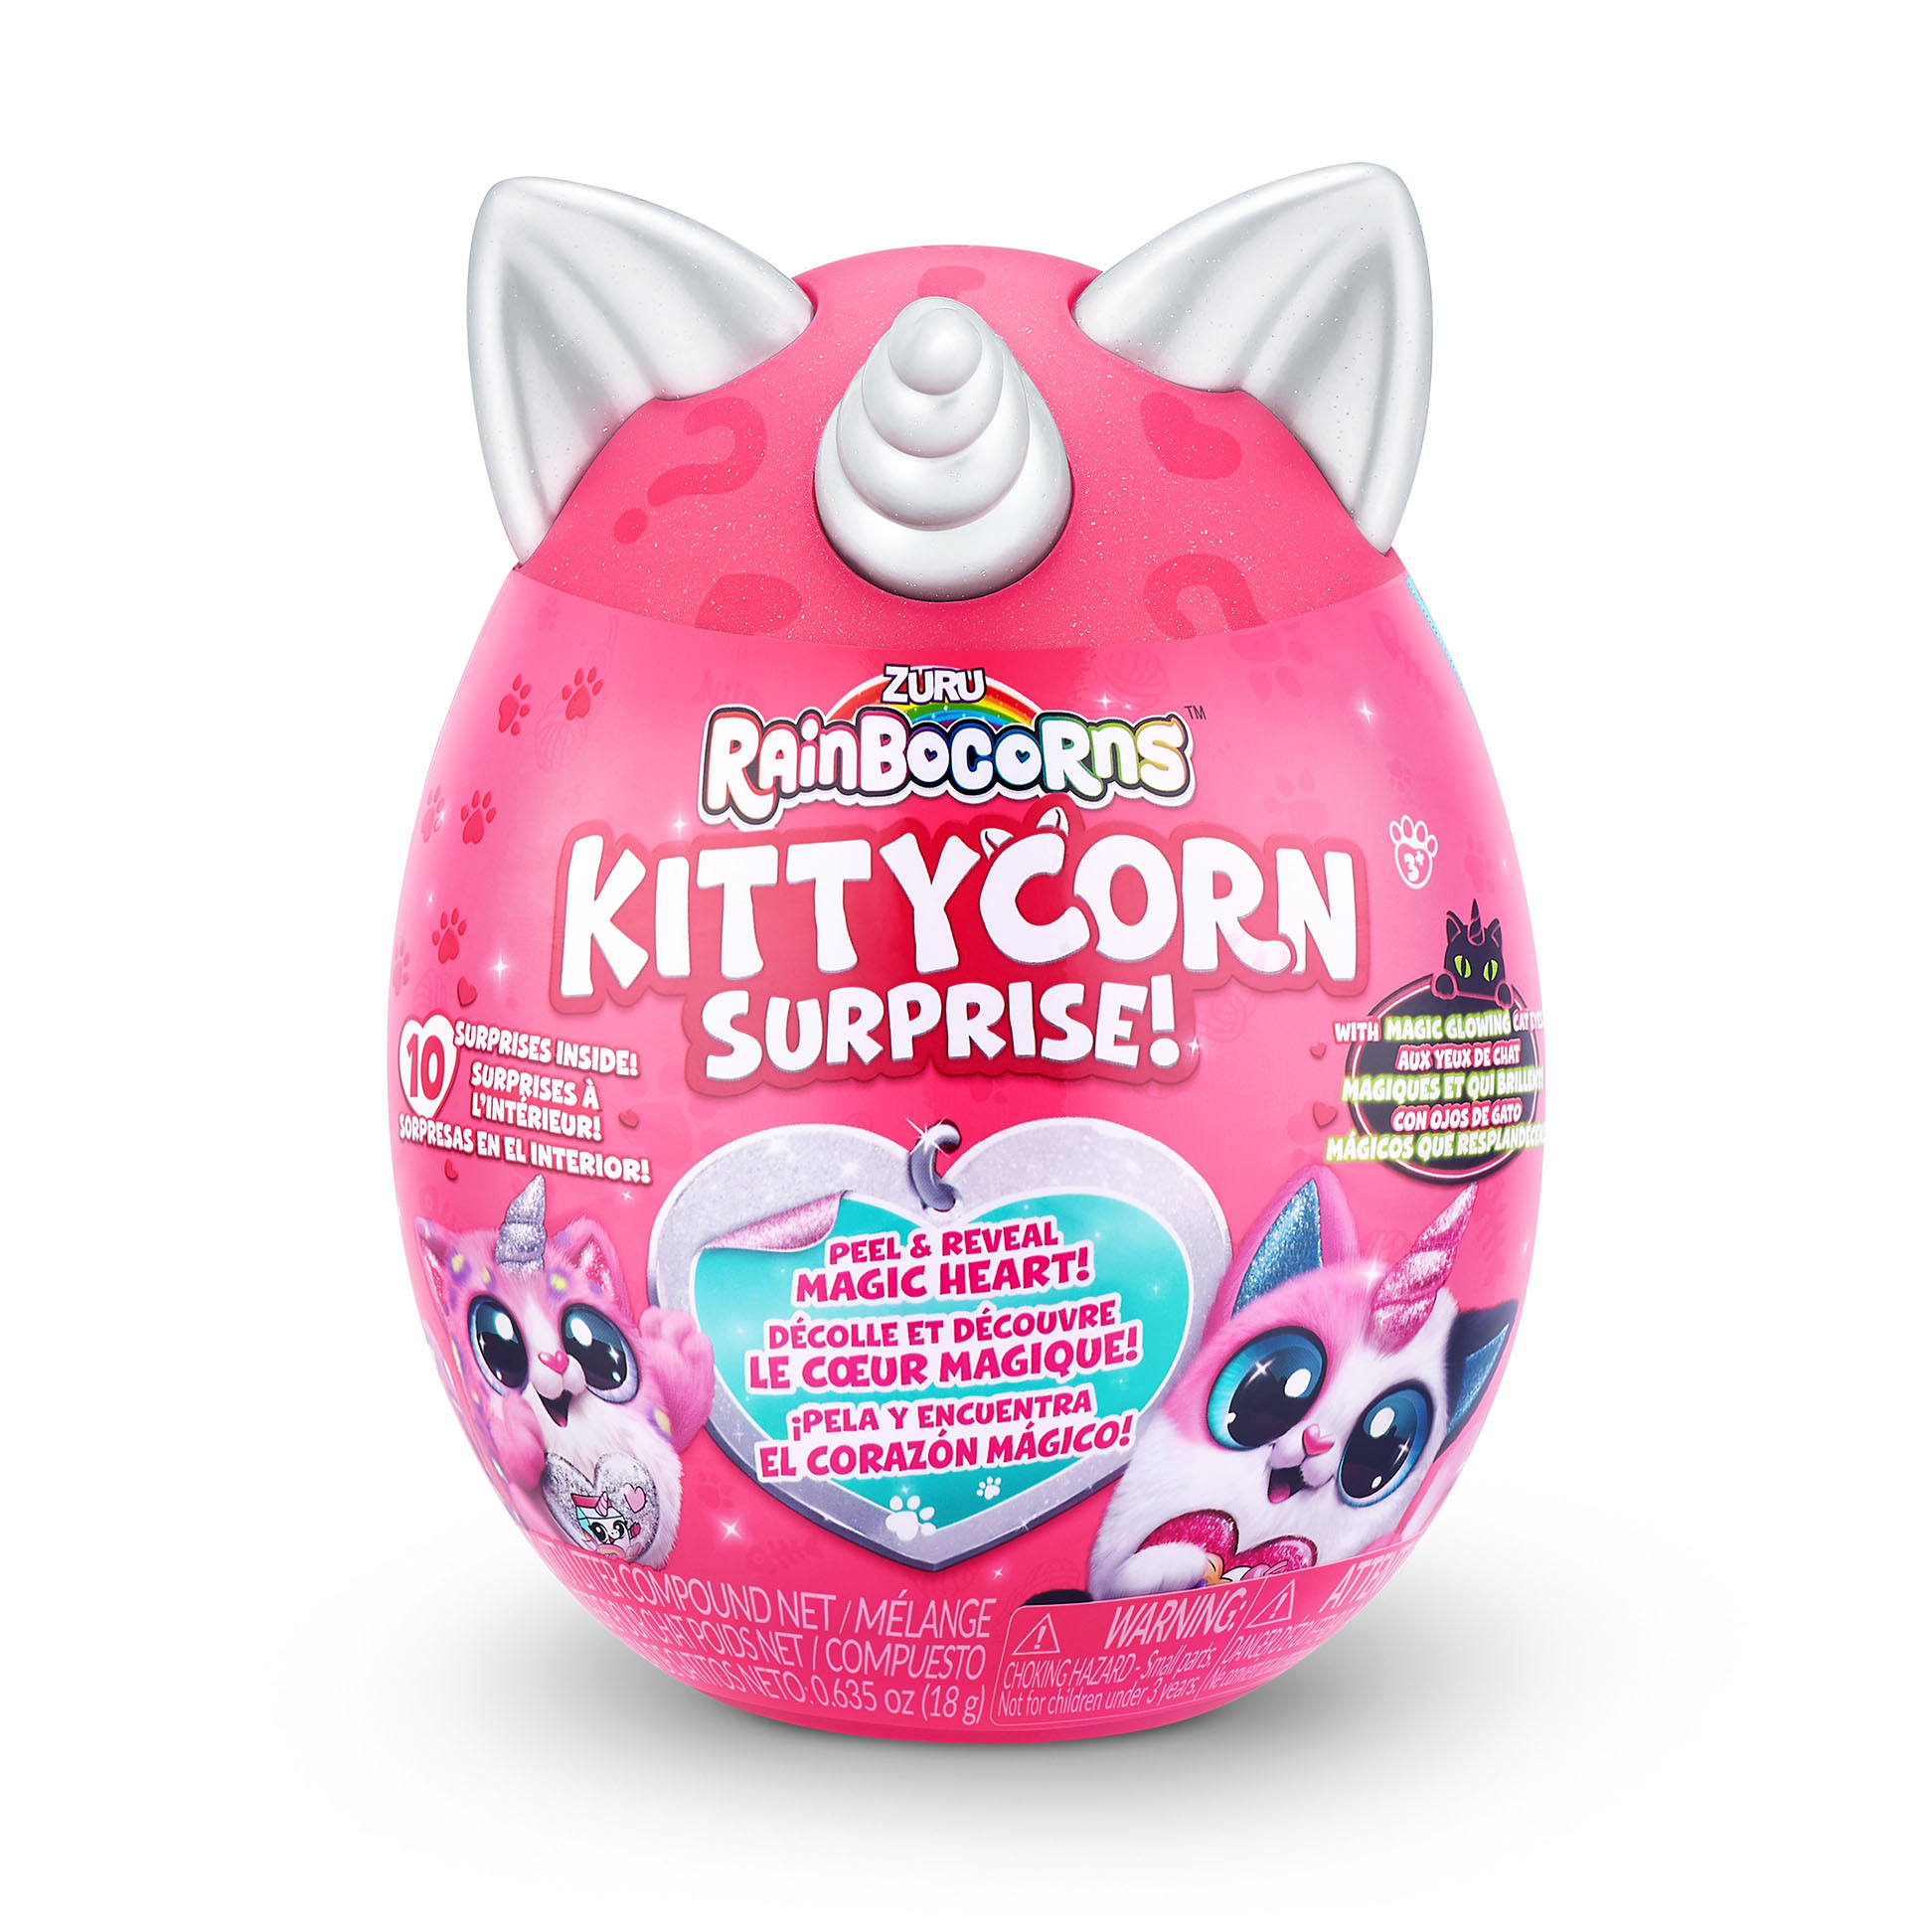 Product image for Zuru RAINBOCORNS-Kittycorn